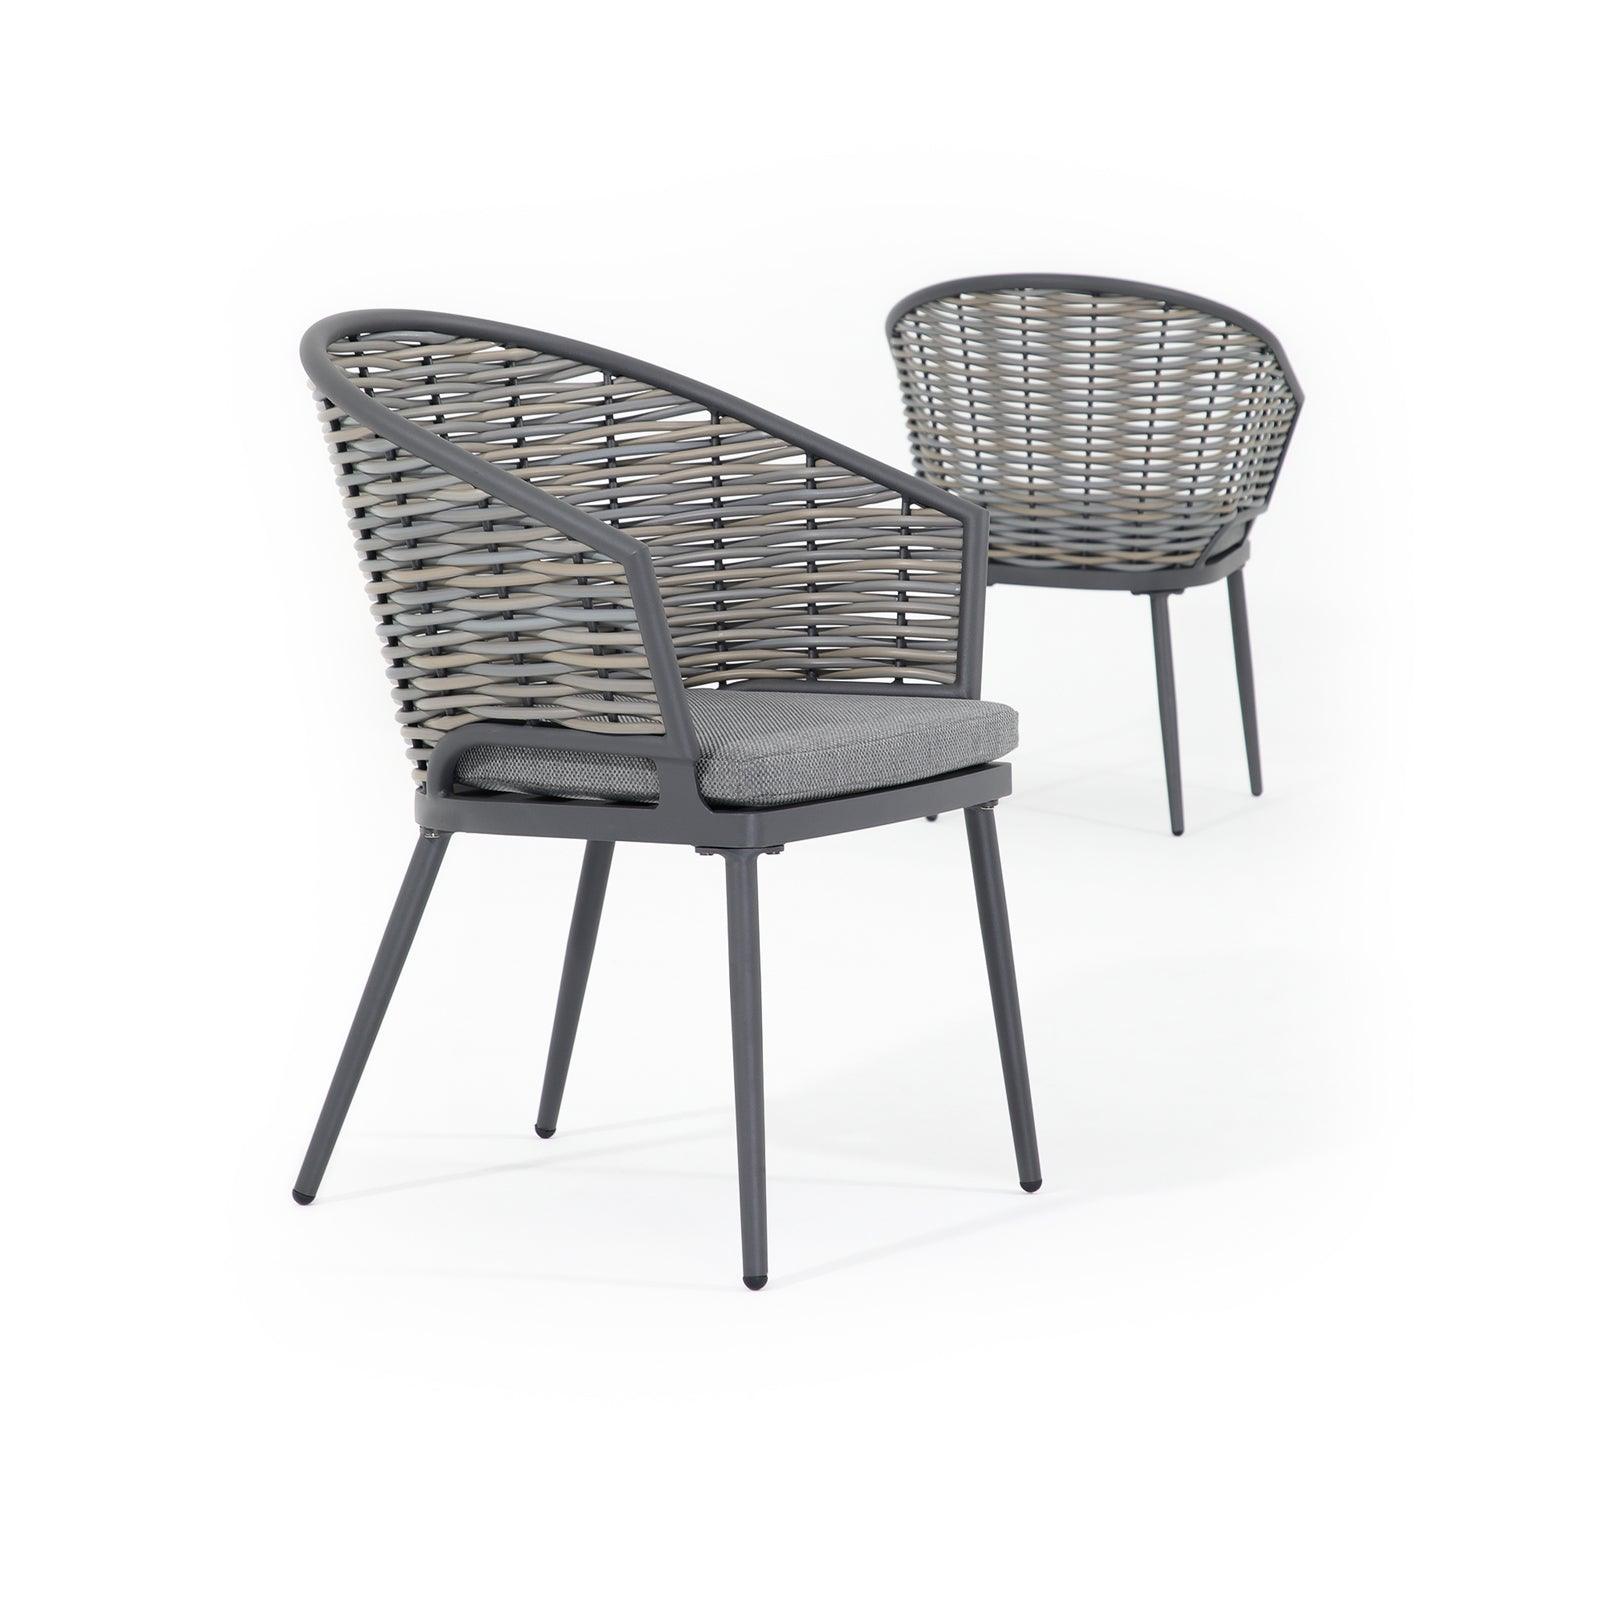 Burano Chair, 2 different angles, rattan design, aluminum frame-Jardina Furniture